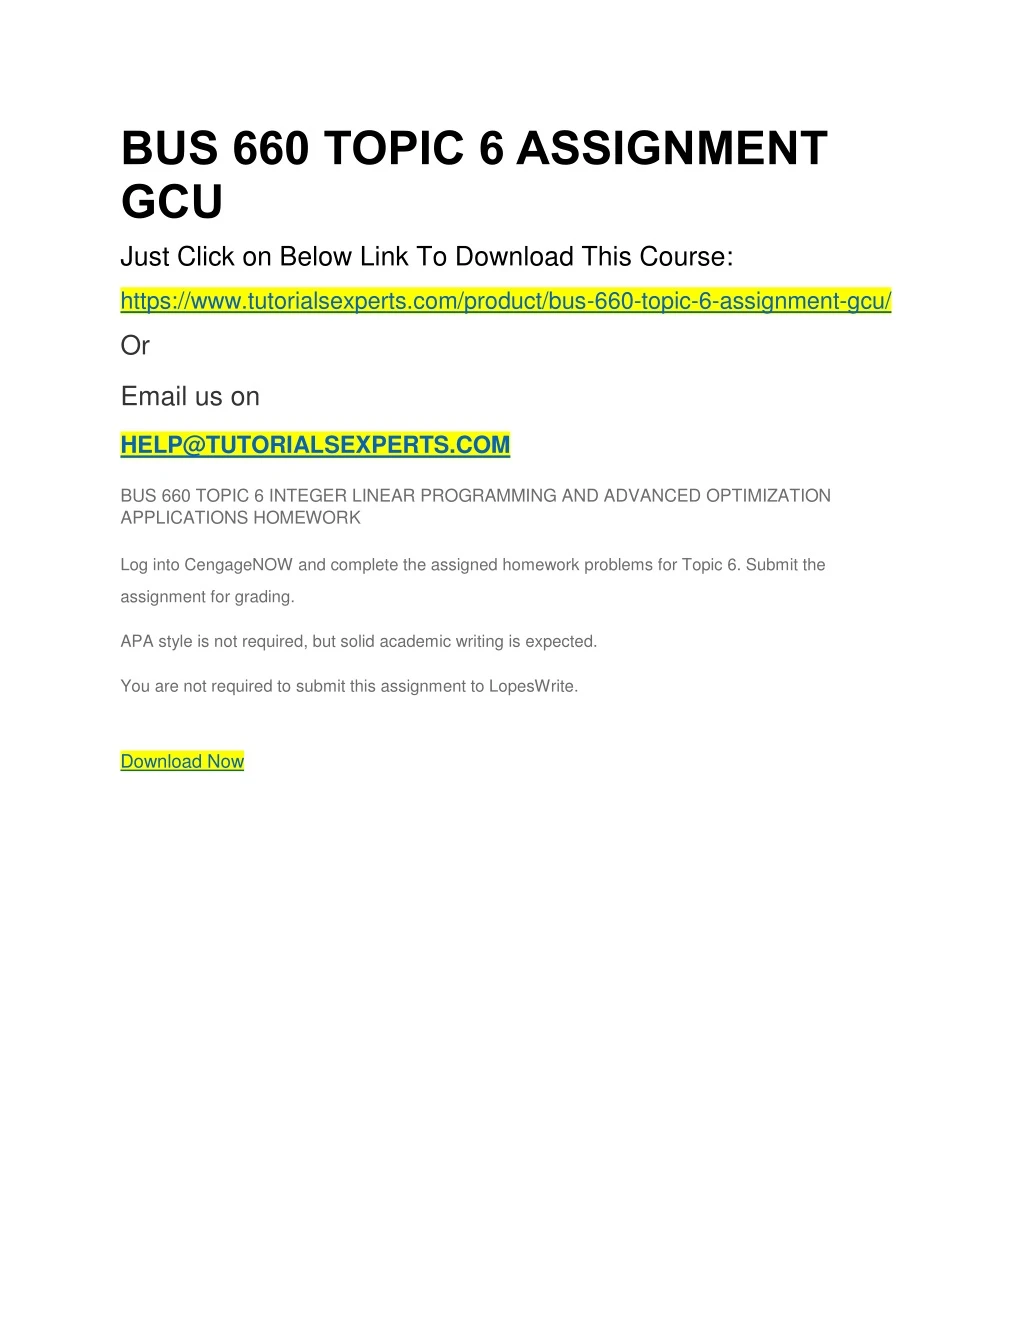 bus 660 topic 6 assignment gcu just click